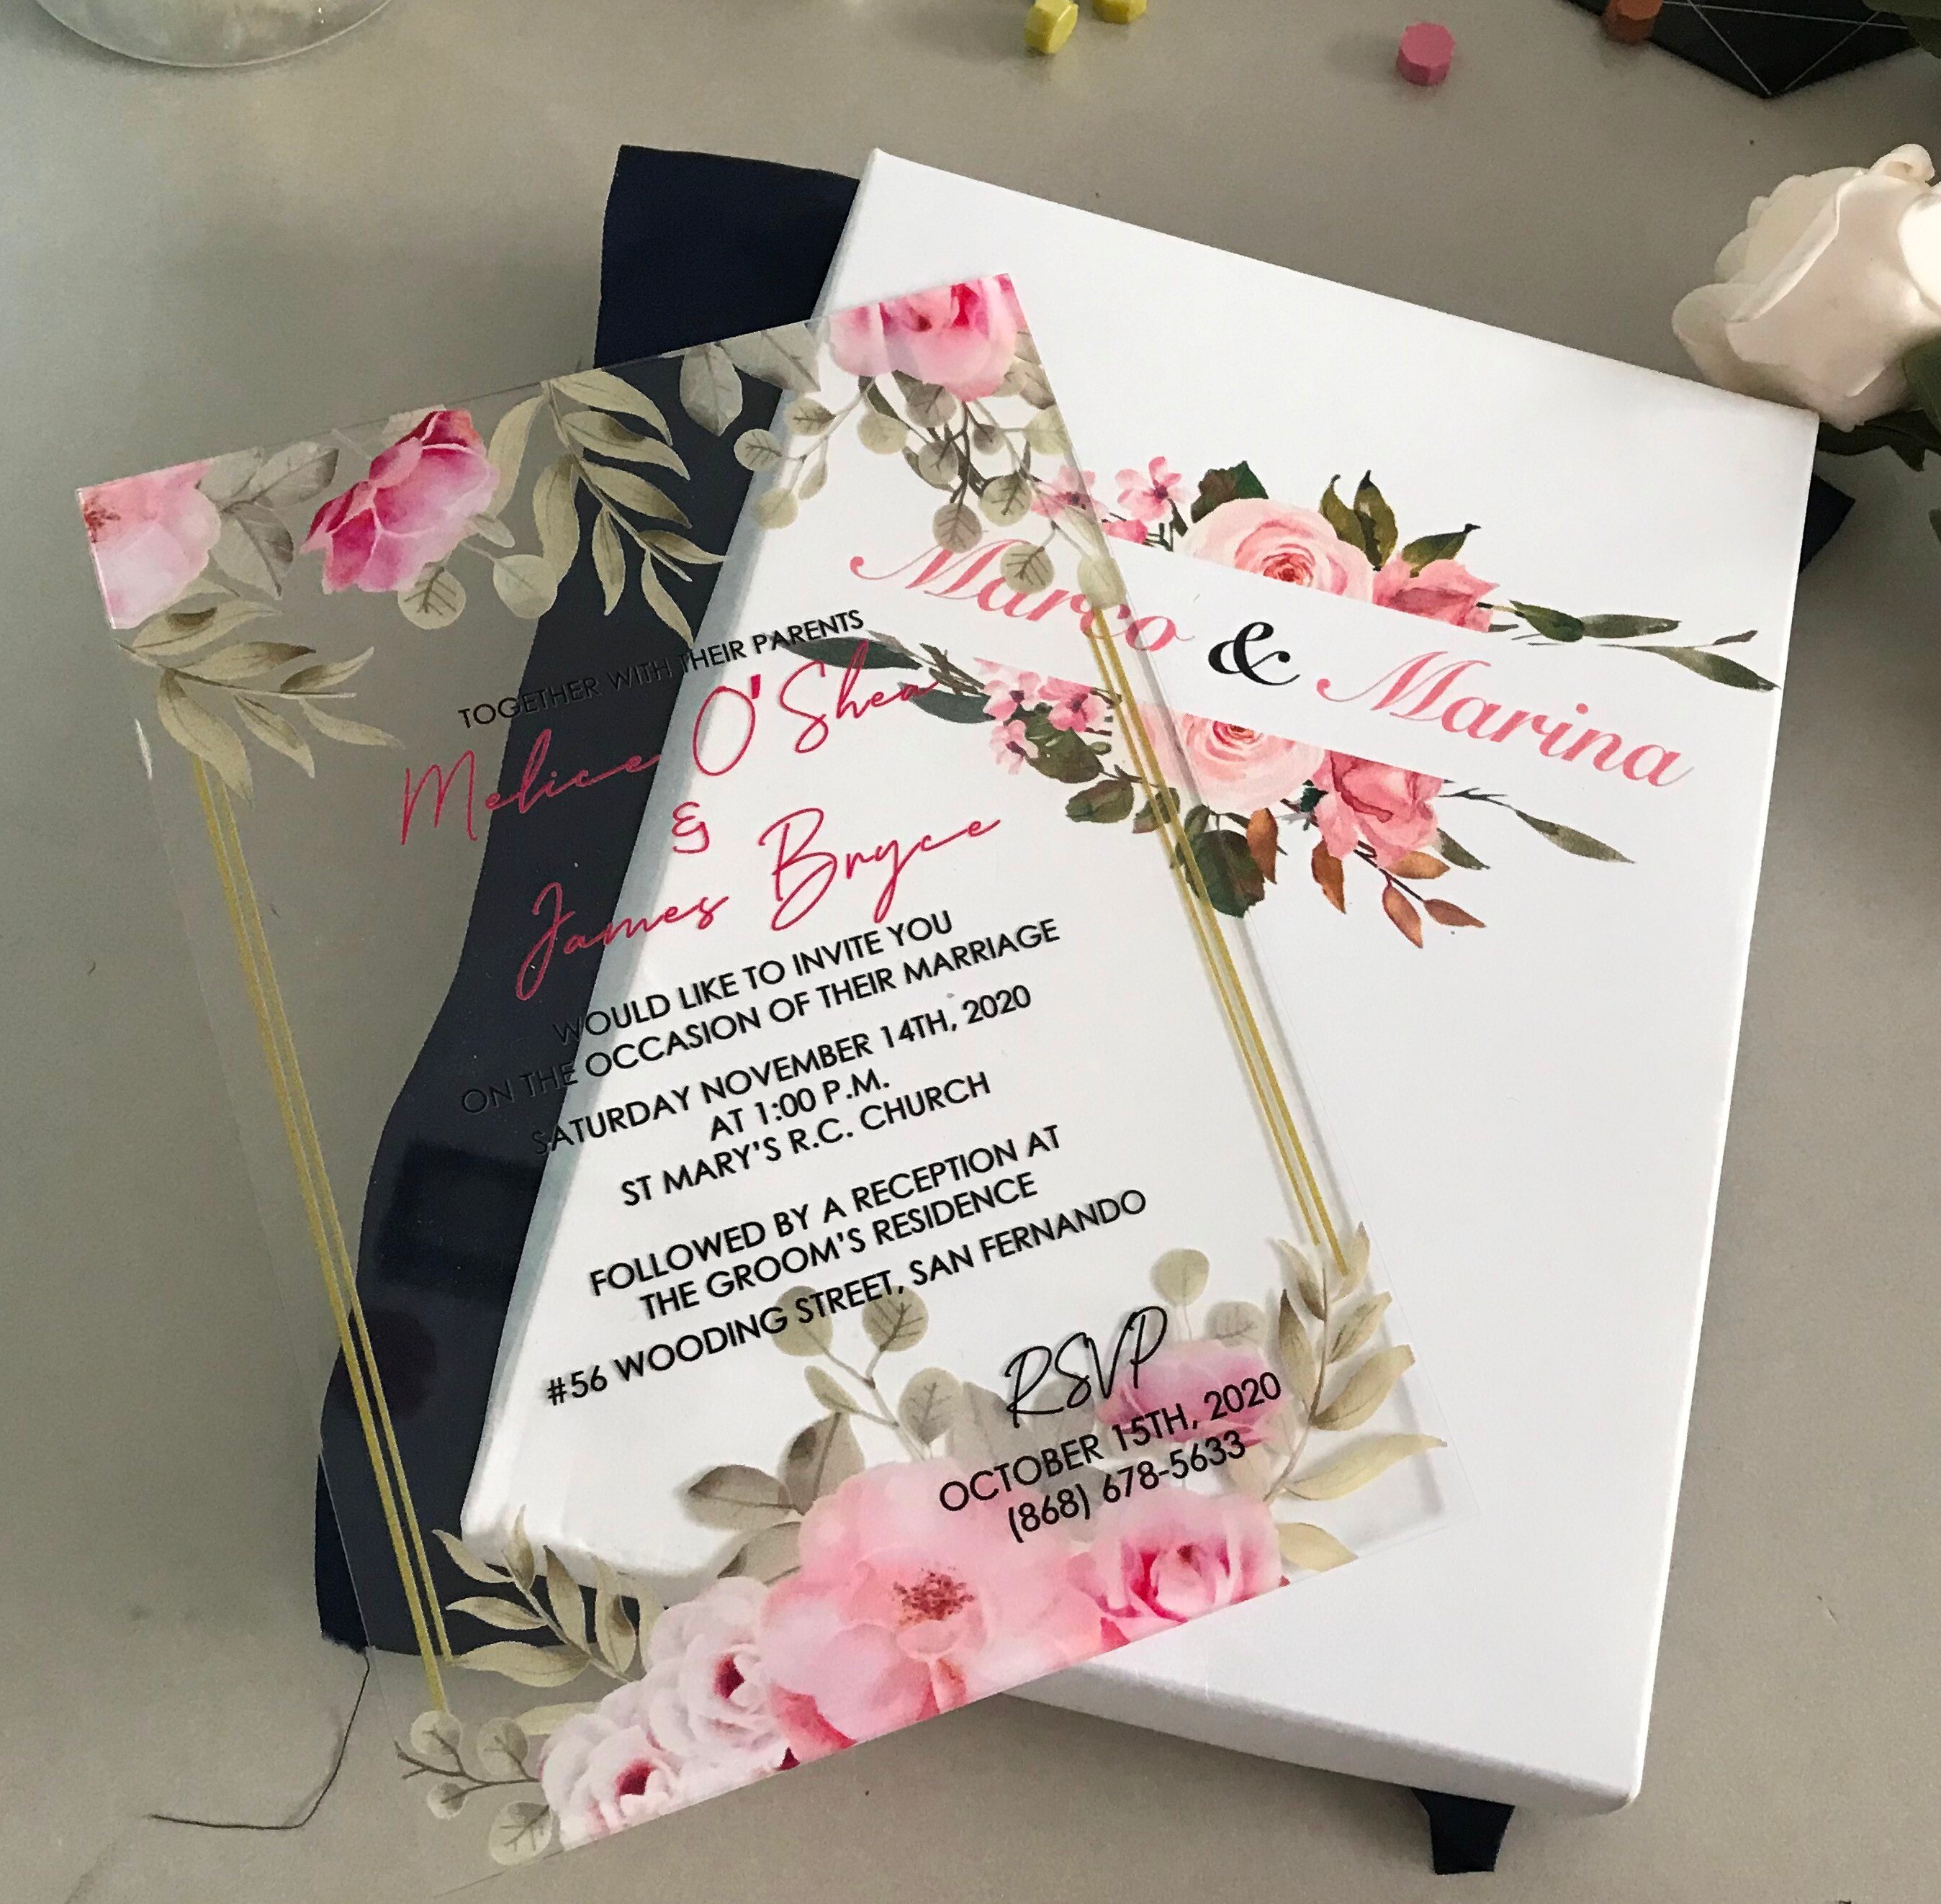 Bryllupsinvitationer i akryl med trykte kasser, fødselsdagsinvitationer i akryl ,10 stk diy kasser, kuverter, brugerdefinerede akryl invitationer